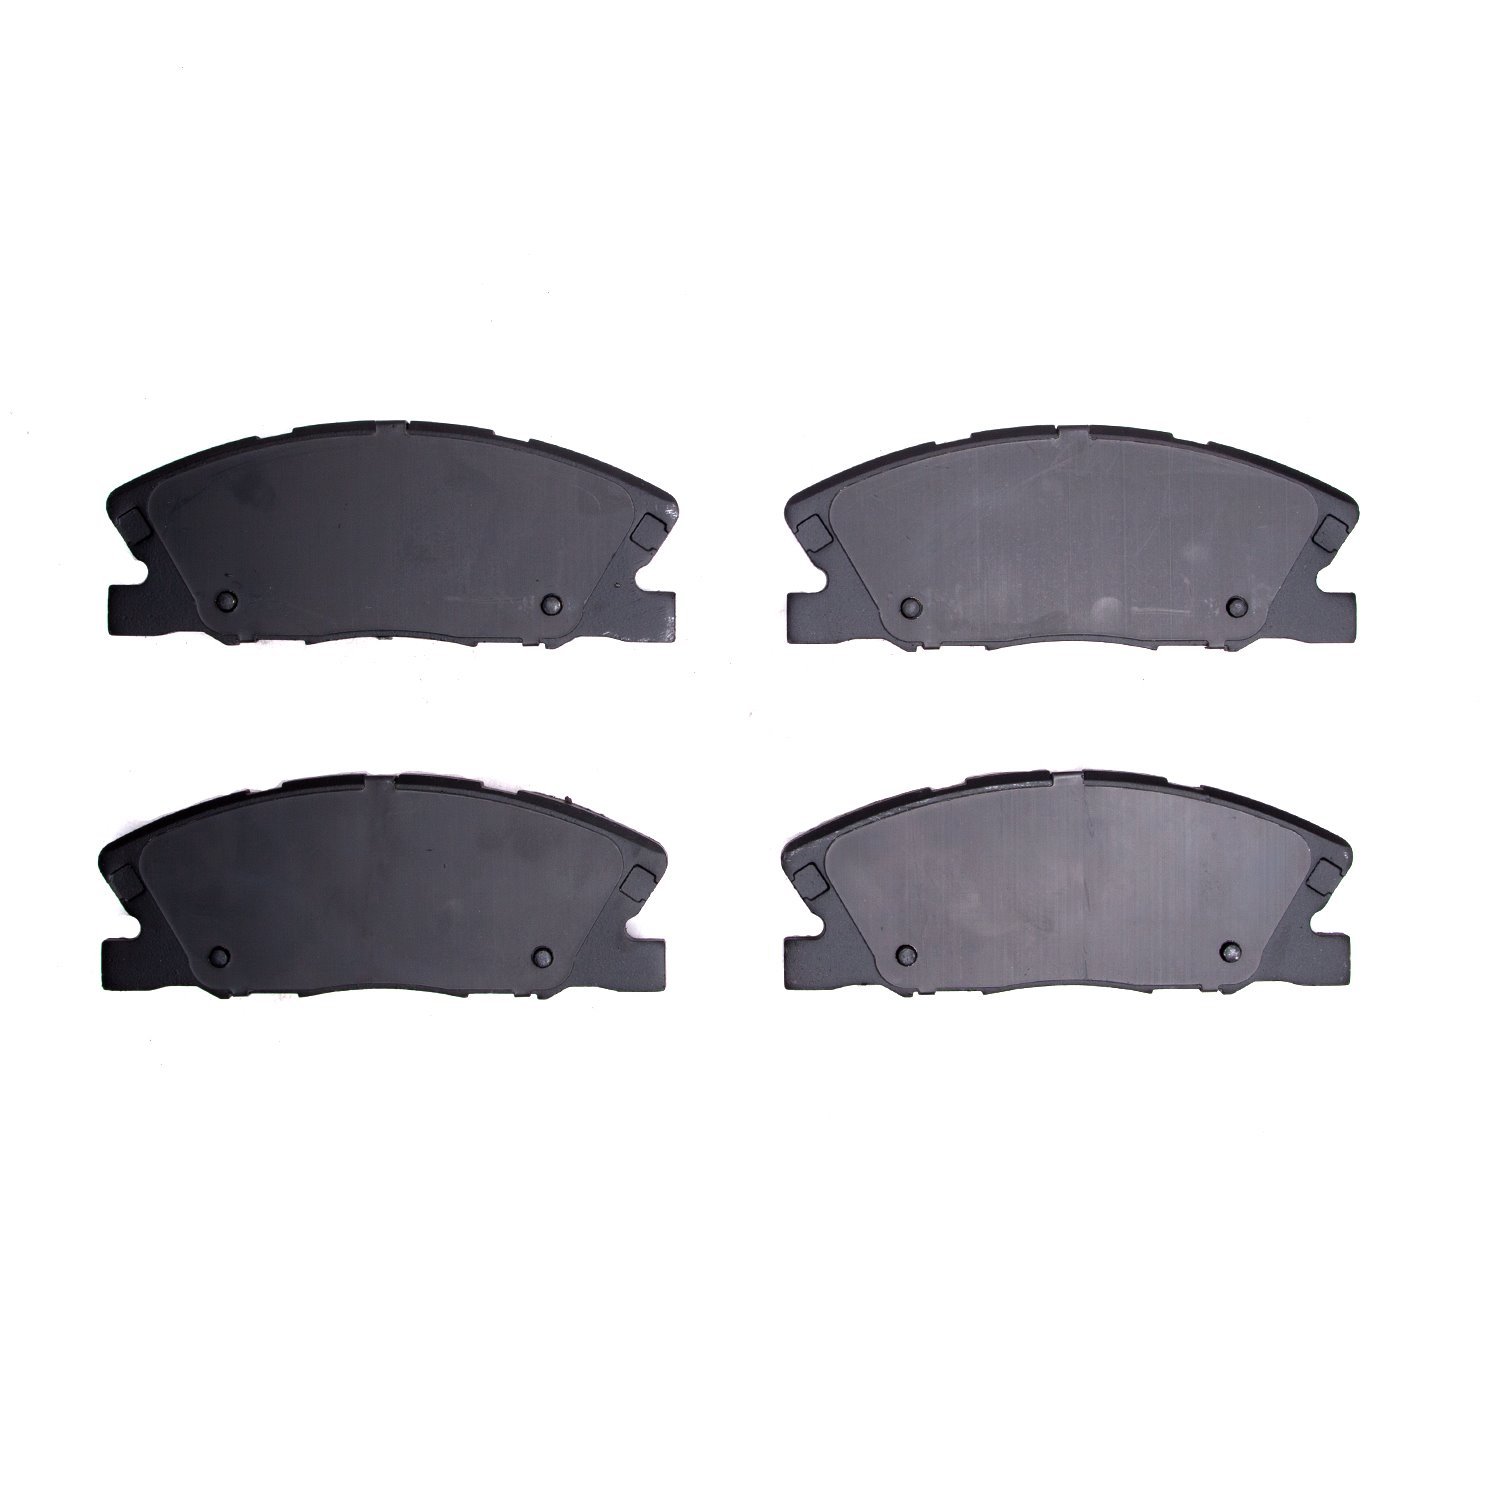 1551-1767-00 5000 Advanced Low-Metallic Brake Pads, Fits Select Mopar, Position: Front